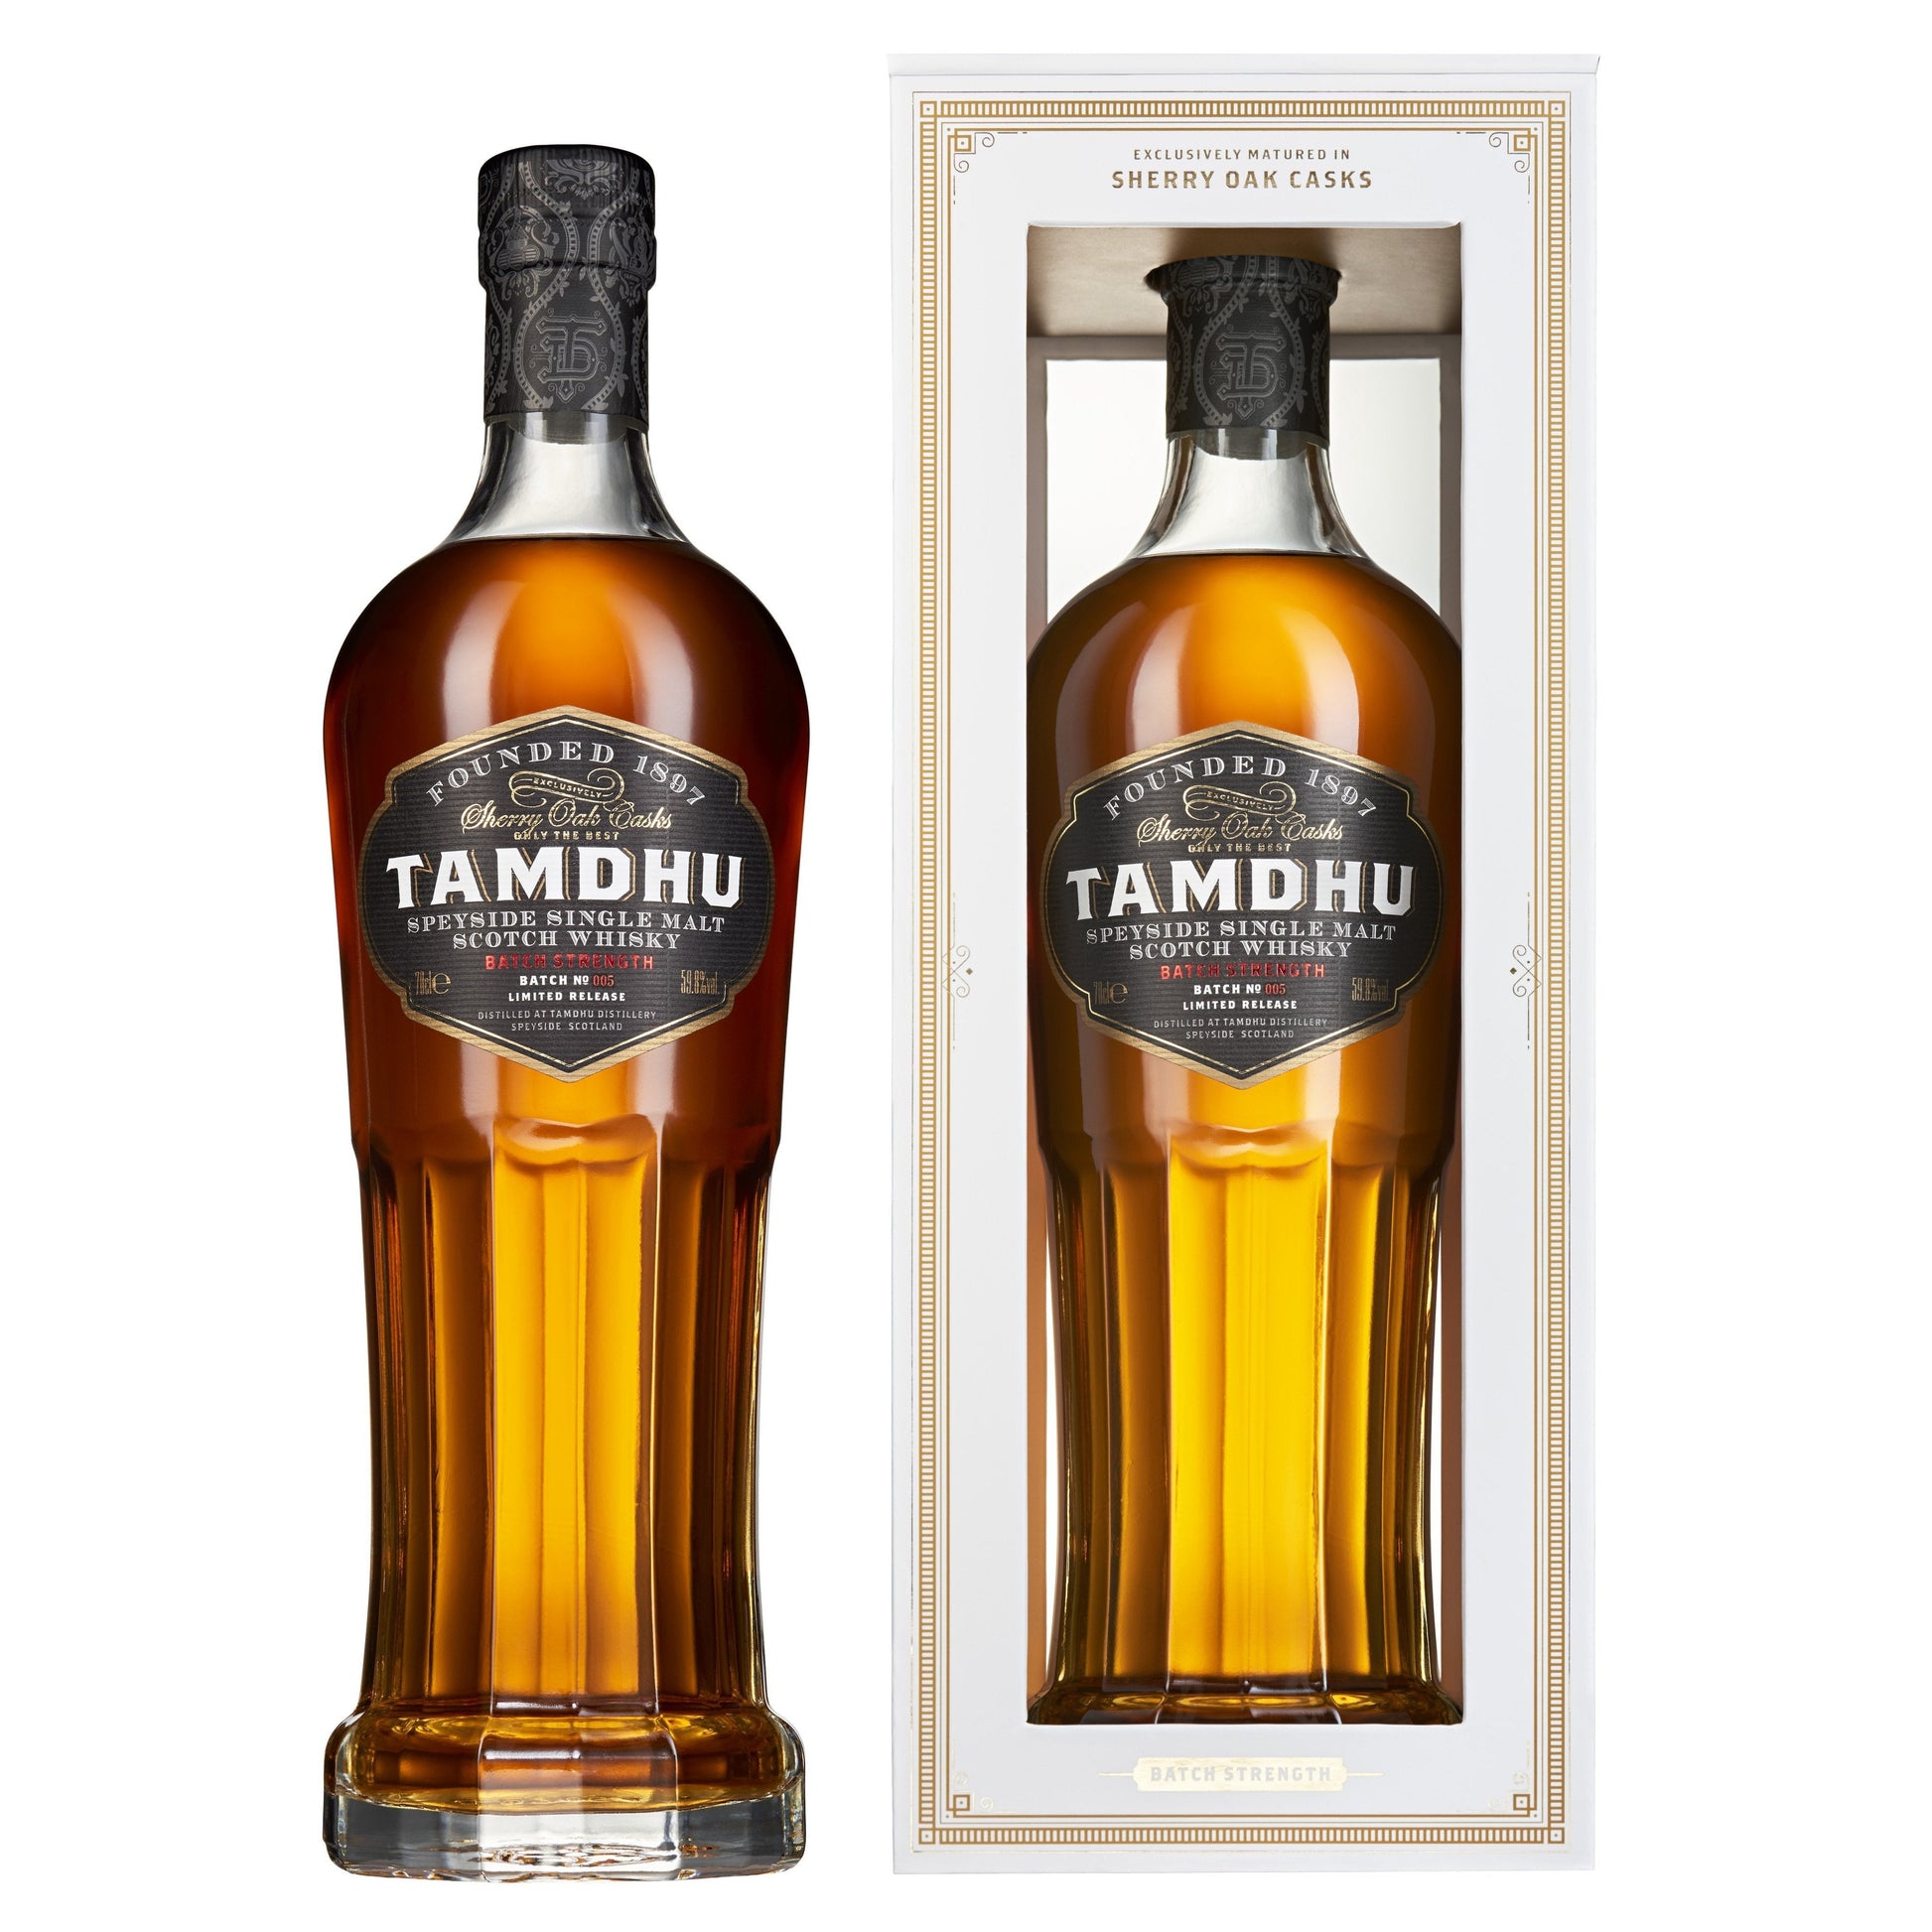 Tamdhu Batch Strength 005 - Single Malt Scotch Whisky-Single Malt Scotch Whisky-5010852045161-Fountainhall Wines